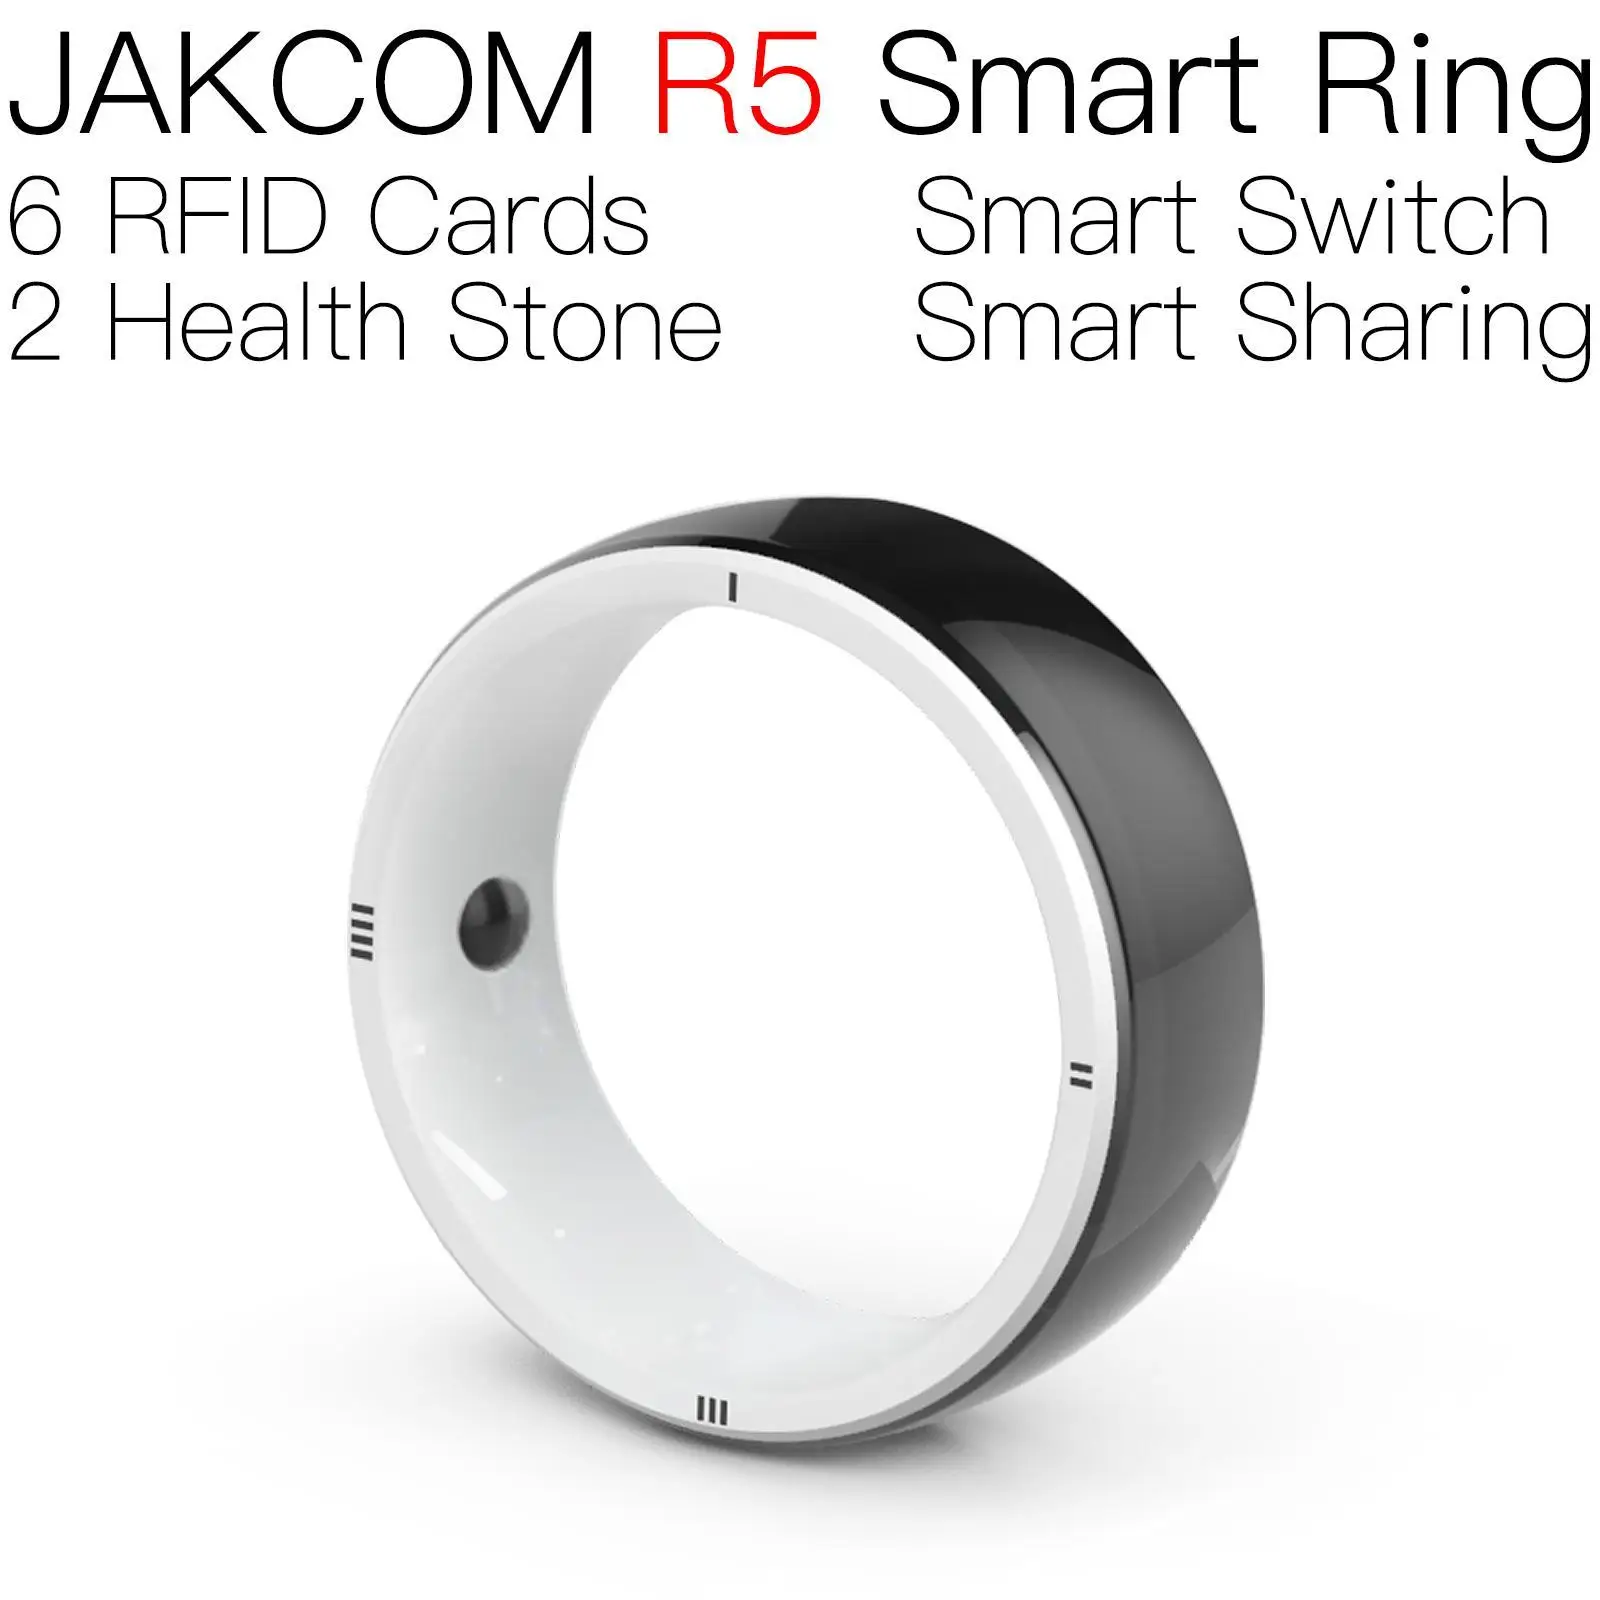 

JAKCOM R5 Smart Ring Nice than kiy tag amibo san rio waterproof rfid tags uhf read write nfc iso 7816 card game cards